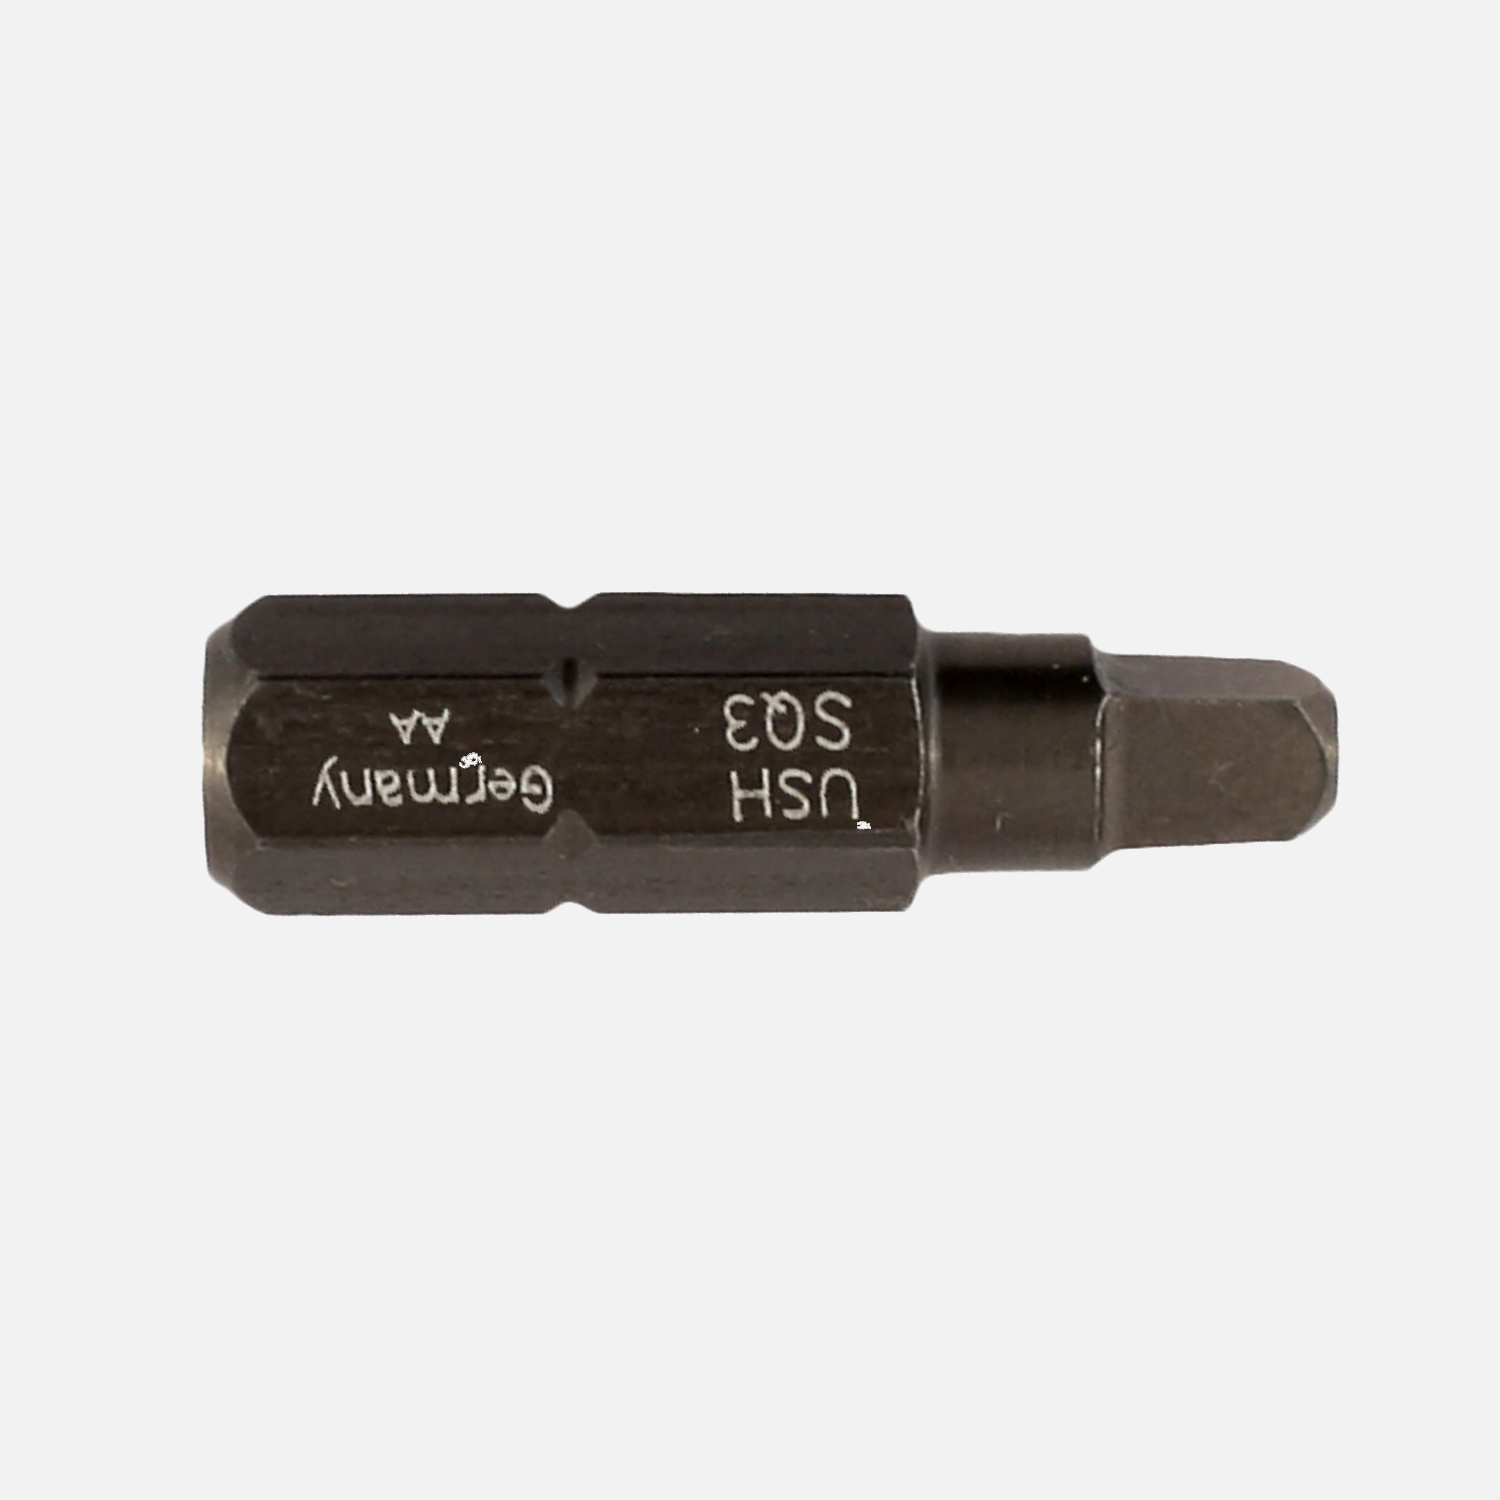 1 Robertson Torsionsbit - Industrie Bits - Gr. 3 1/4" 25mm High Quality